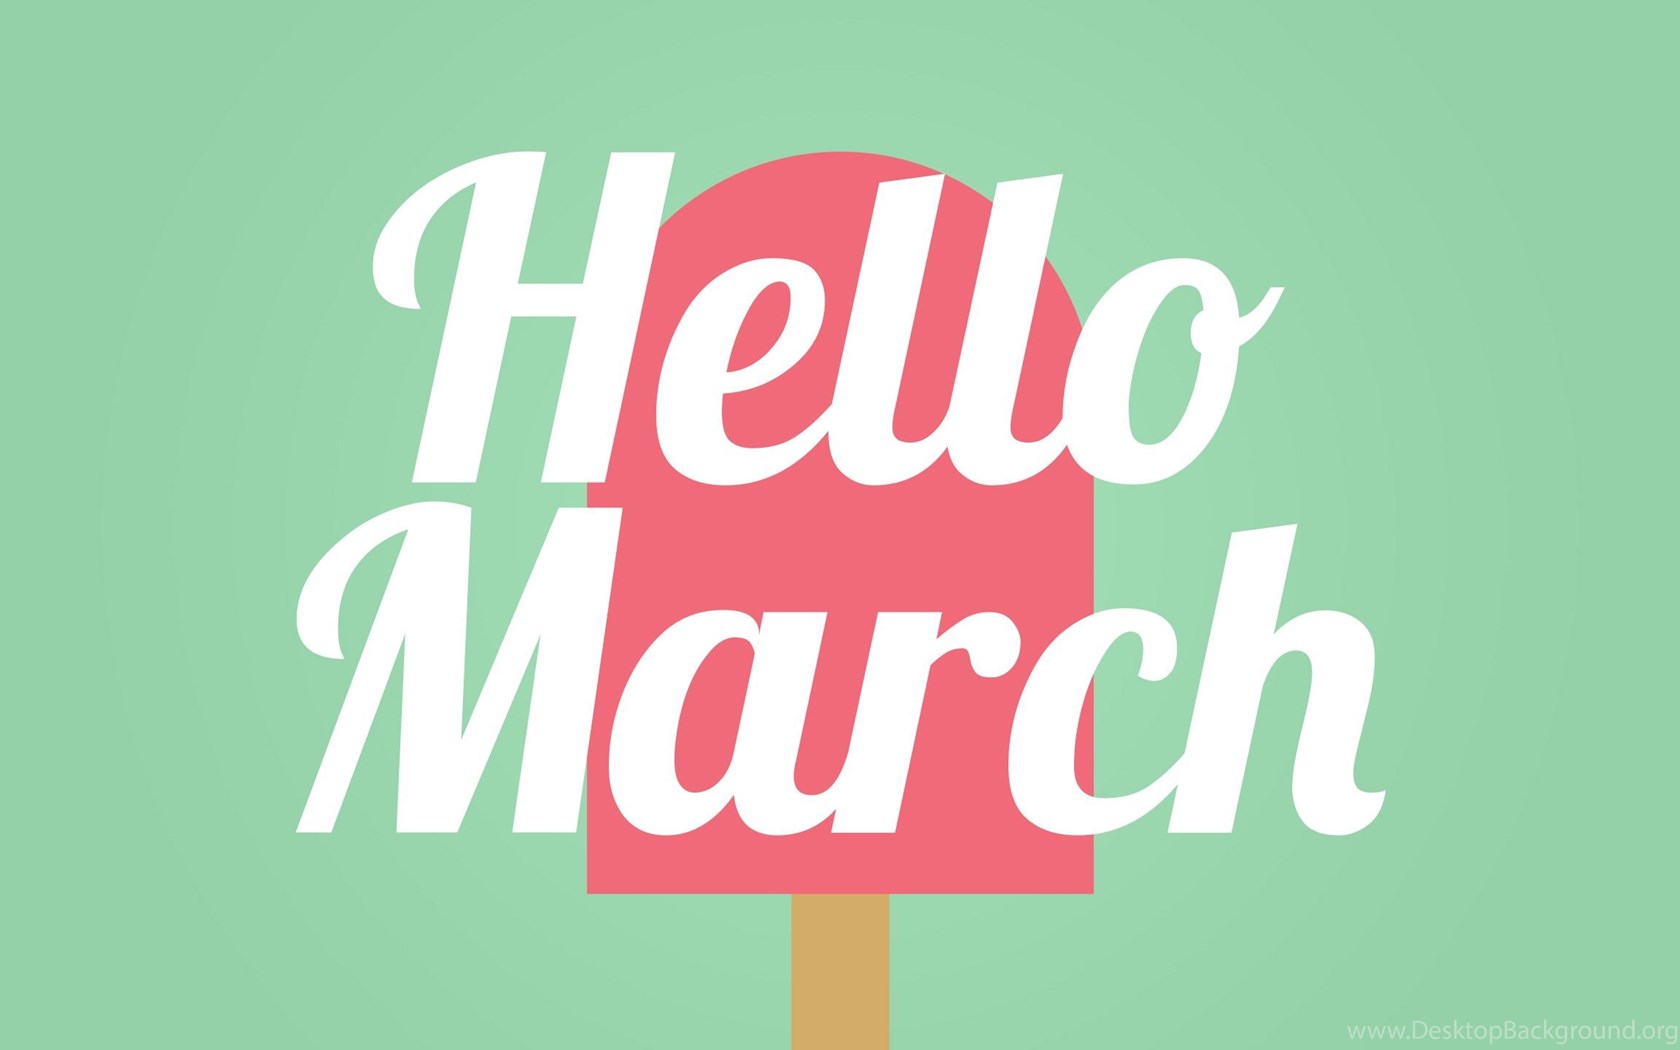 Надпись хеллоу. March надпись. Надпись hello March. Hello March картинки. Hello March картинки на рабочий стол.